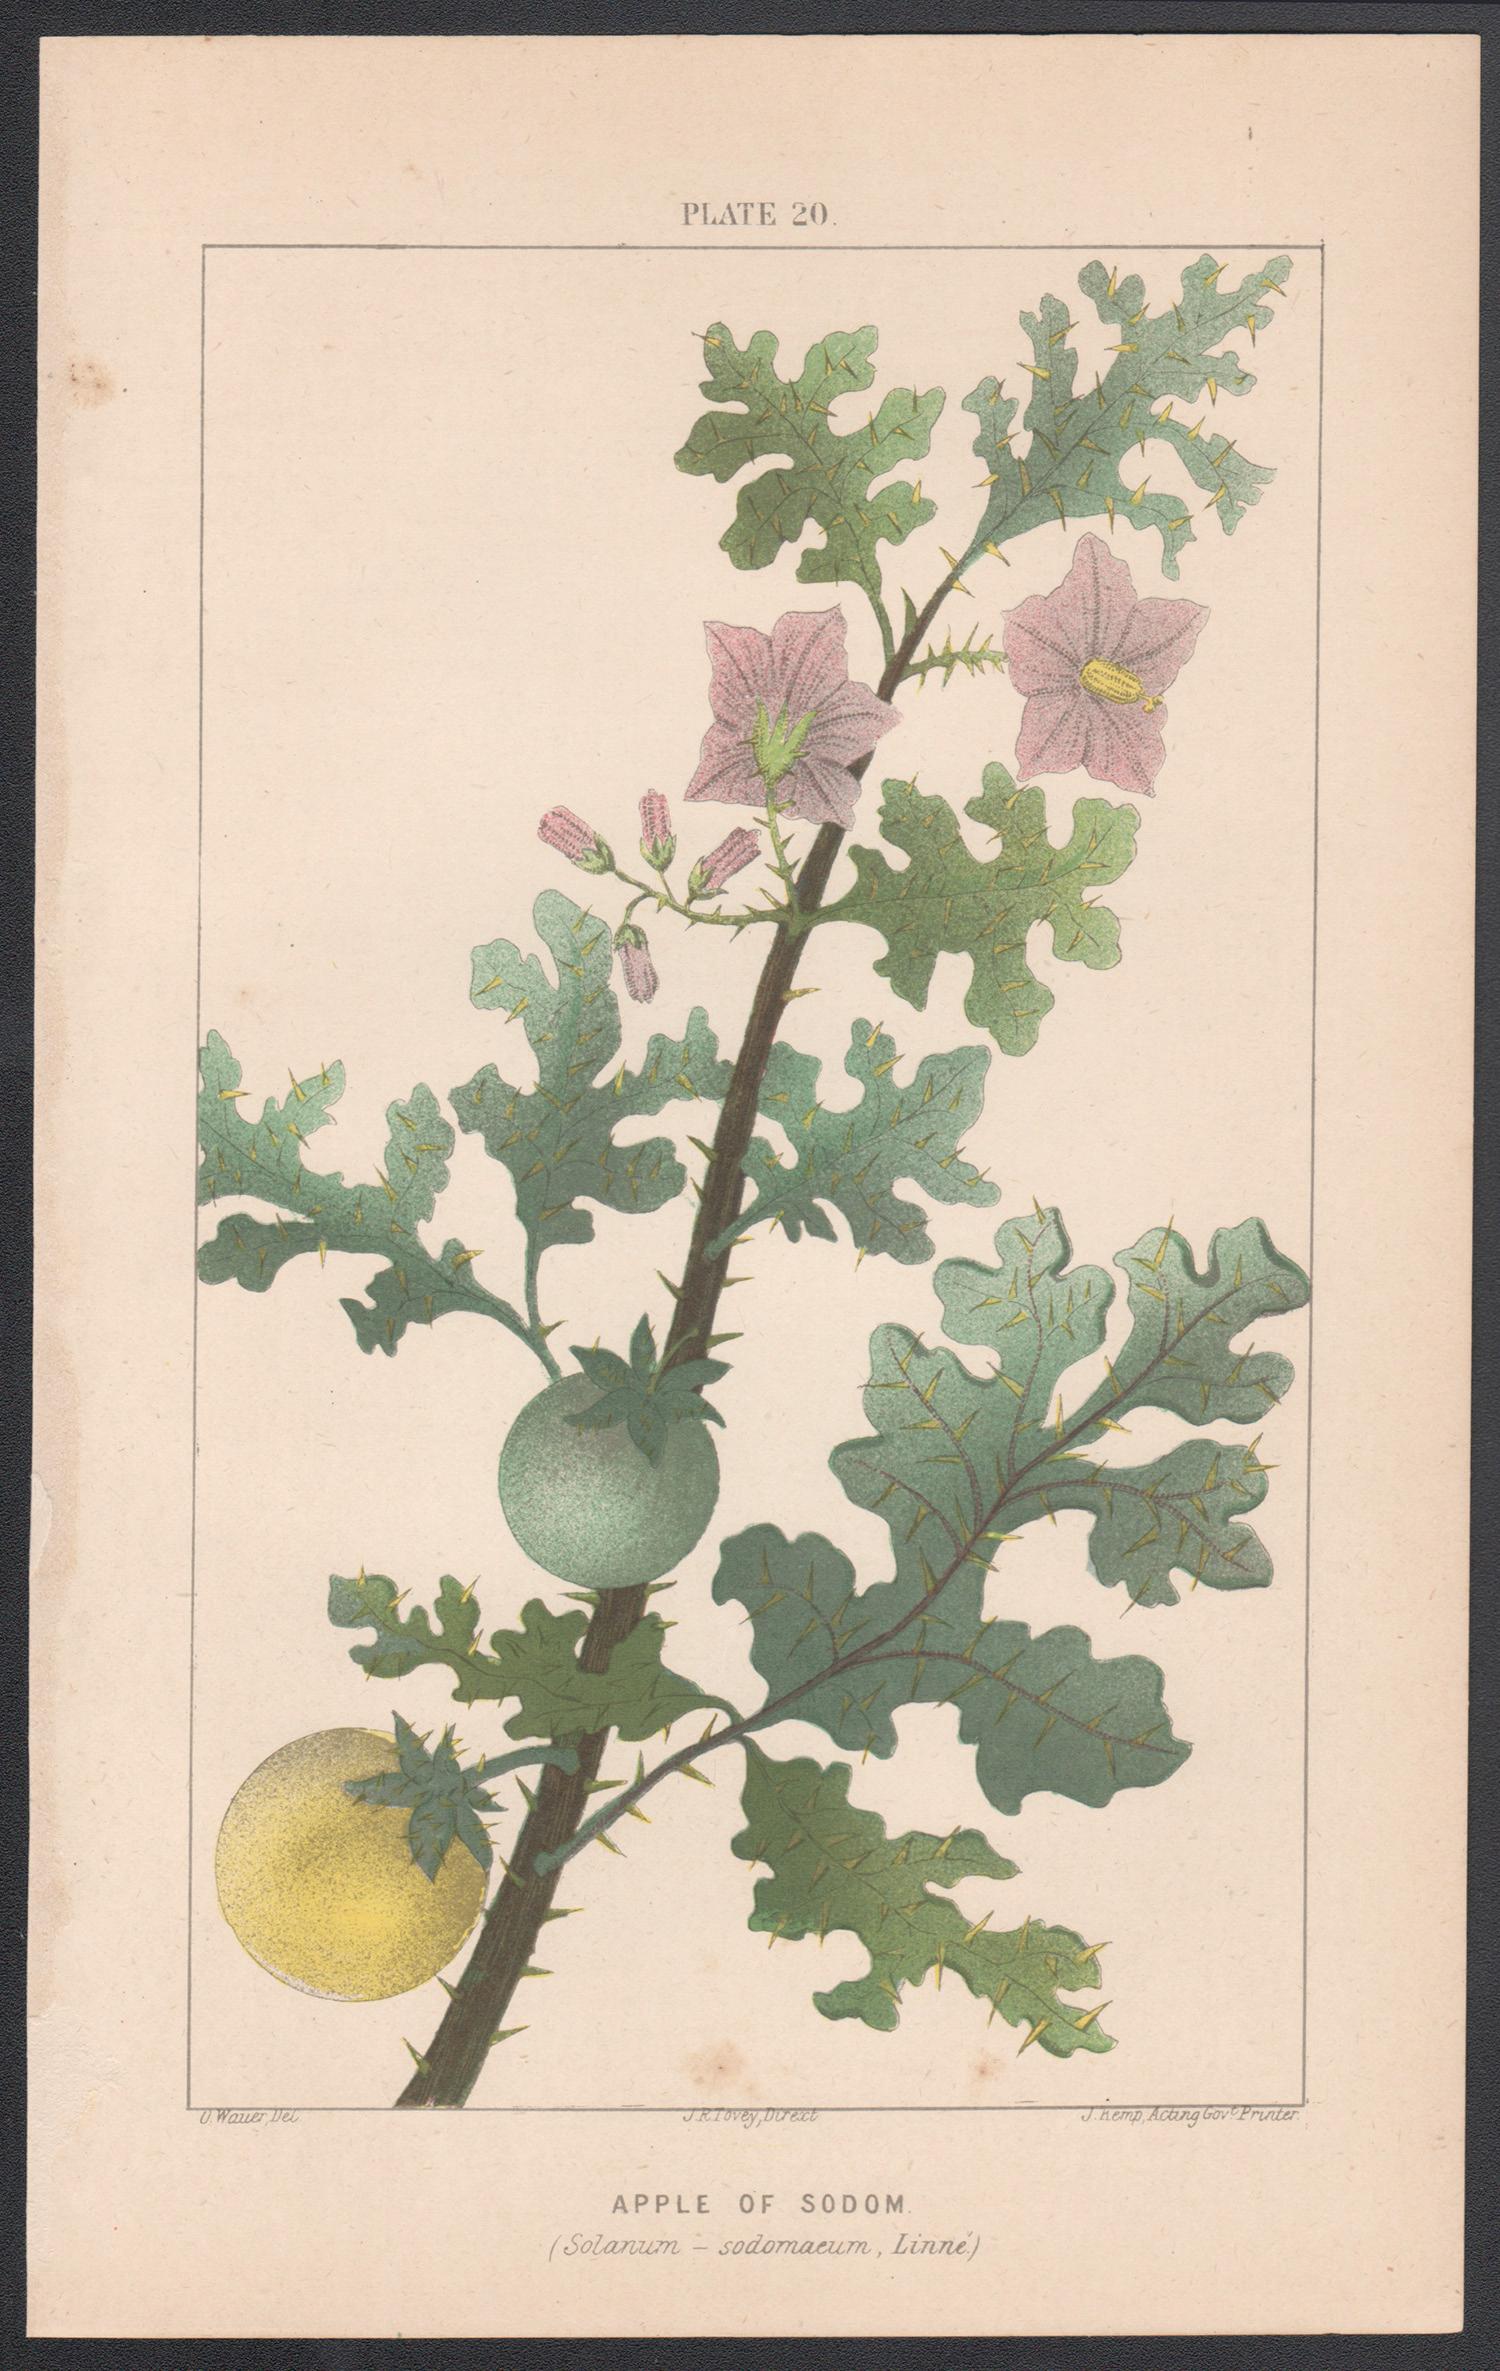 Apple of Sodom (Solanum - sodomaeum, Linne), antique botanical plant lithograph - Print by O Wauer